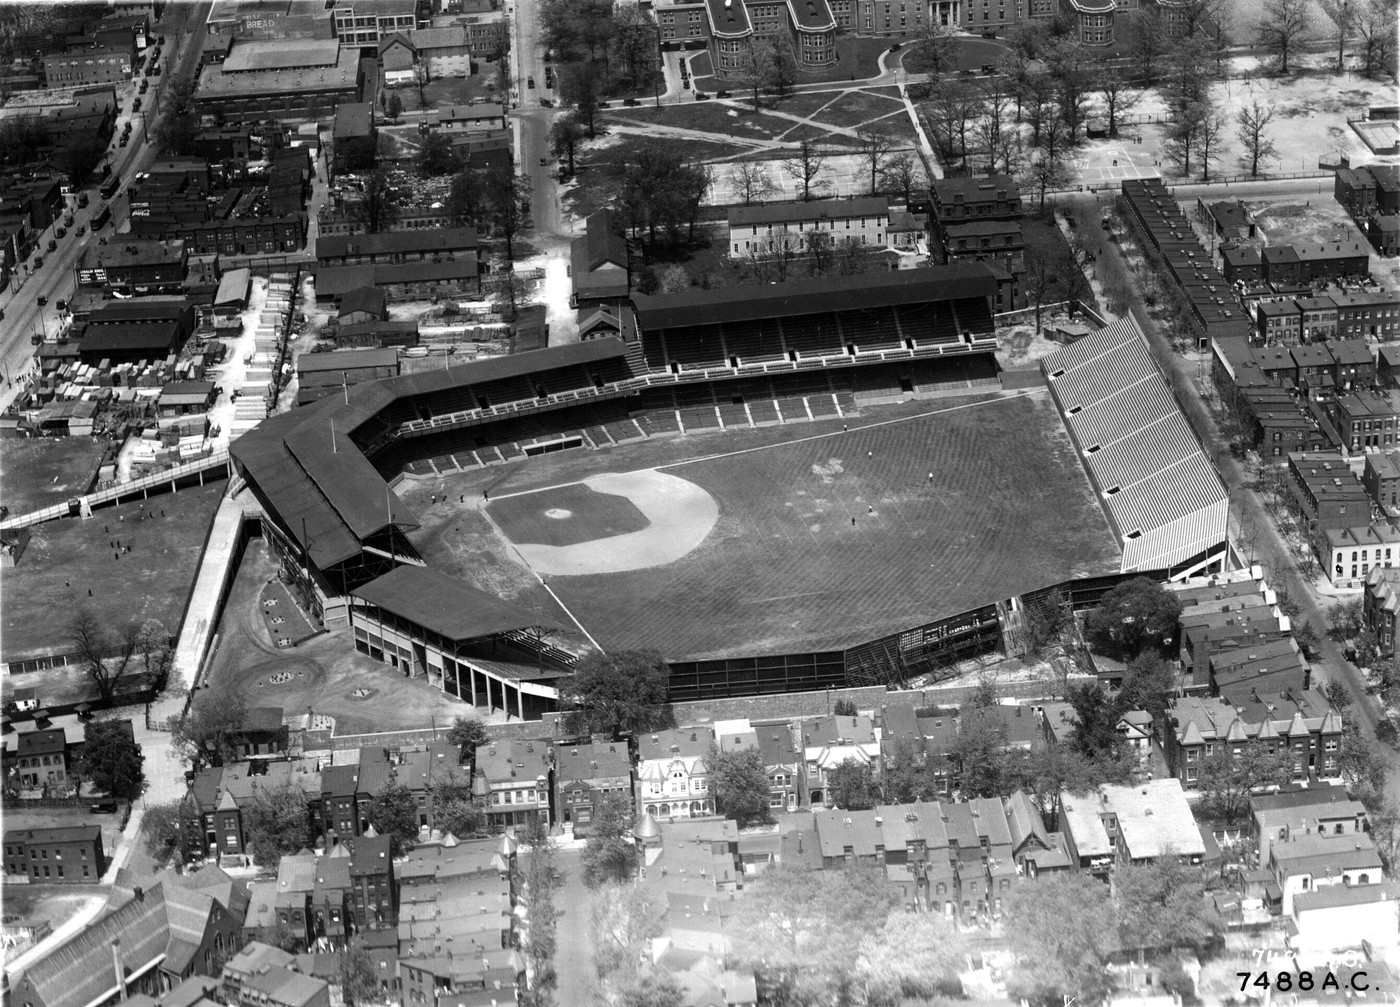 Griffith Stadium - history, photos and more of the Washington Senators  former ballpark